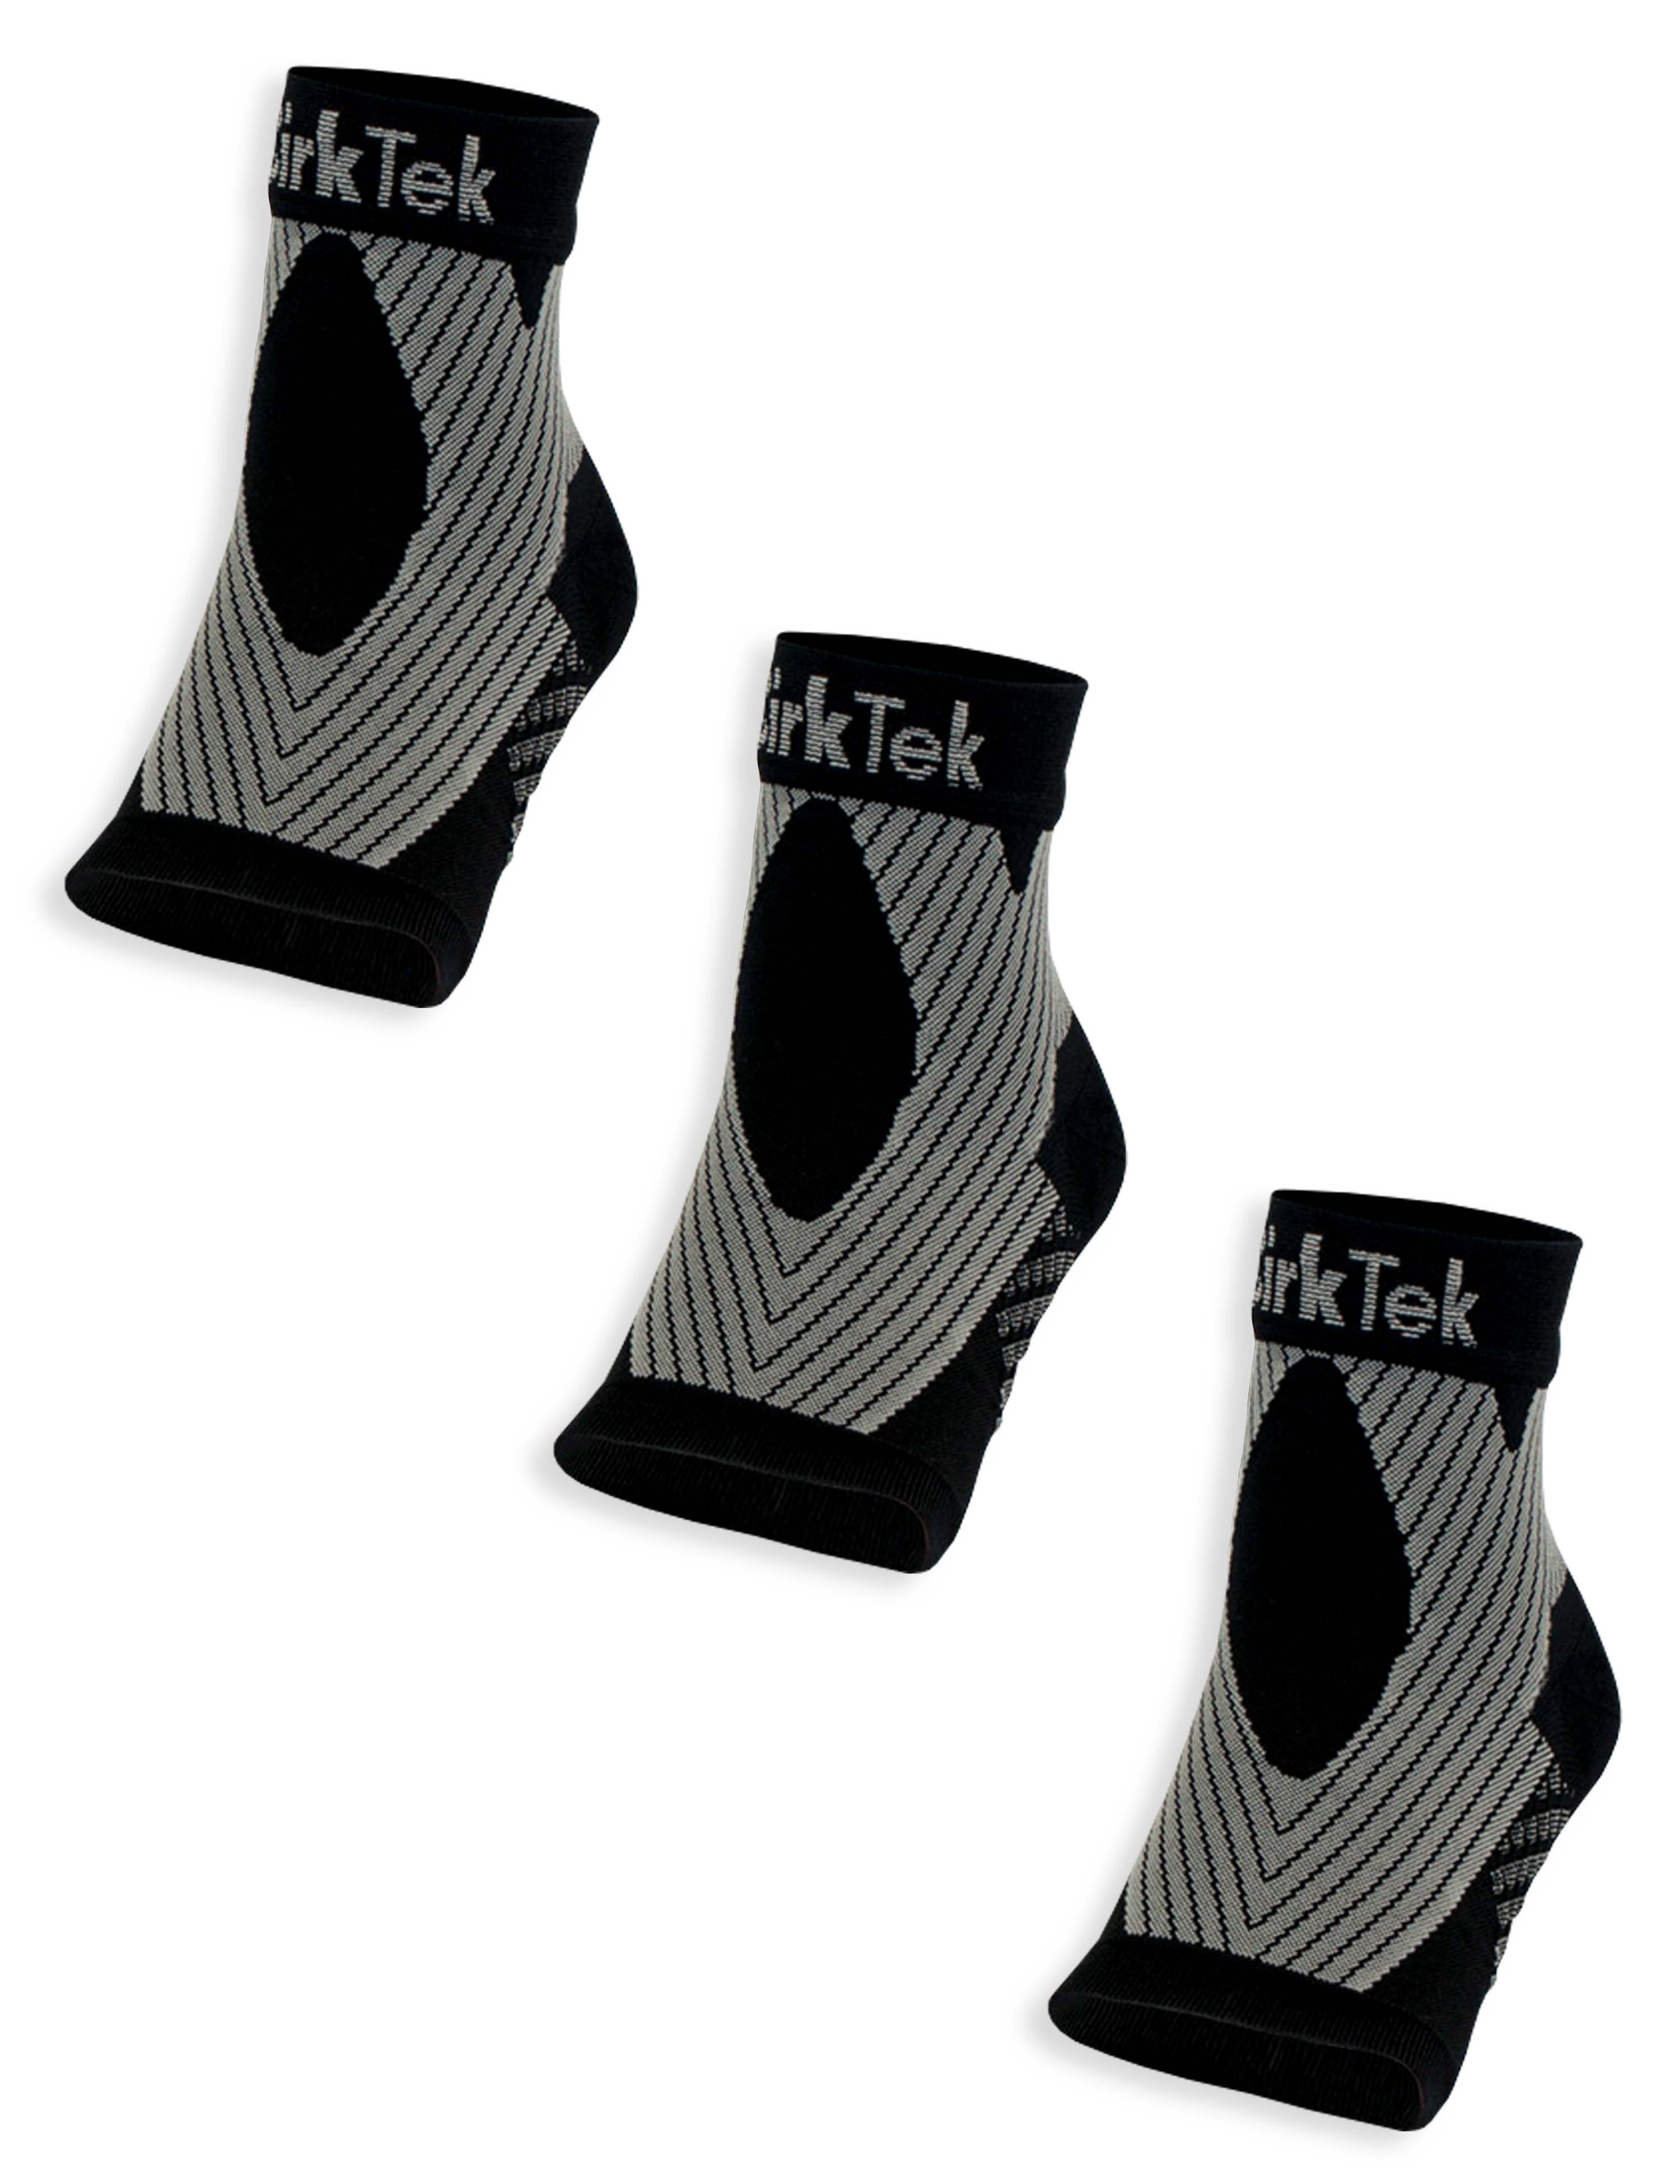 Ankle Sleeve 20-30mmHg 3PACK - Black